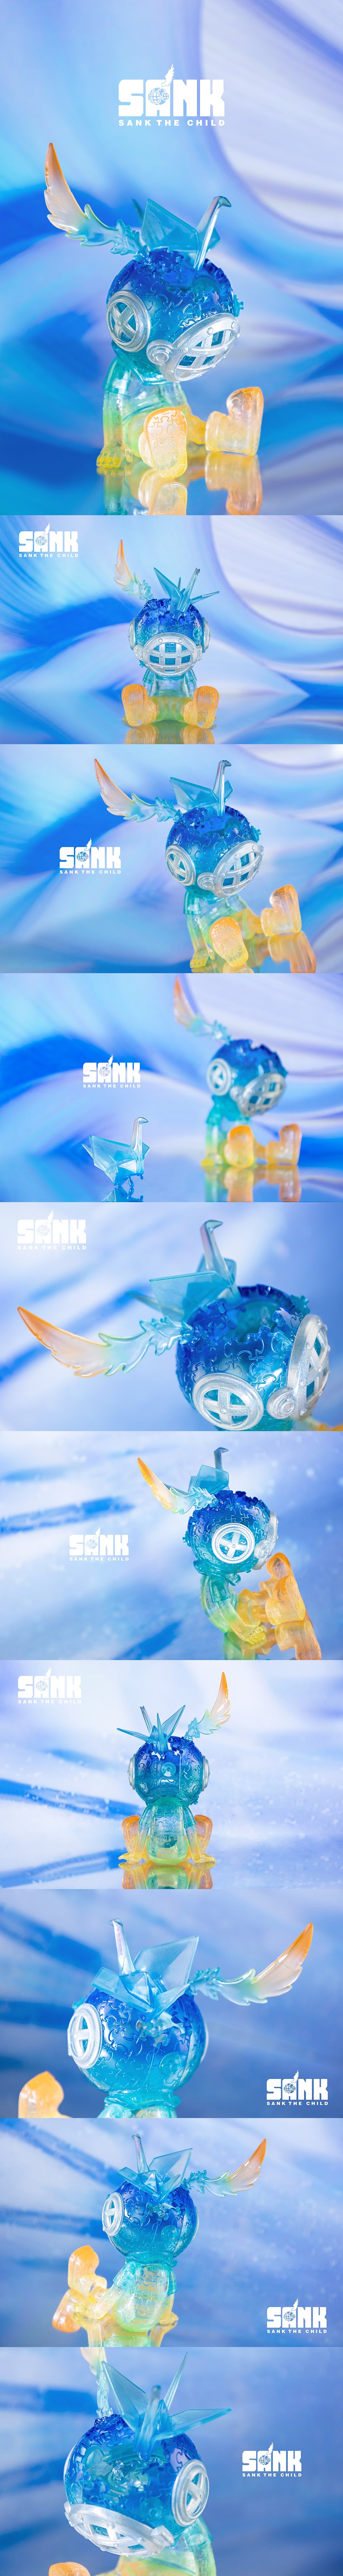 Sank Good Night Series Memories - Blue Ink  Collectible Figurine